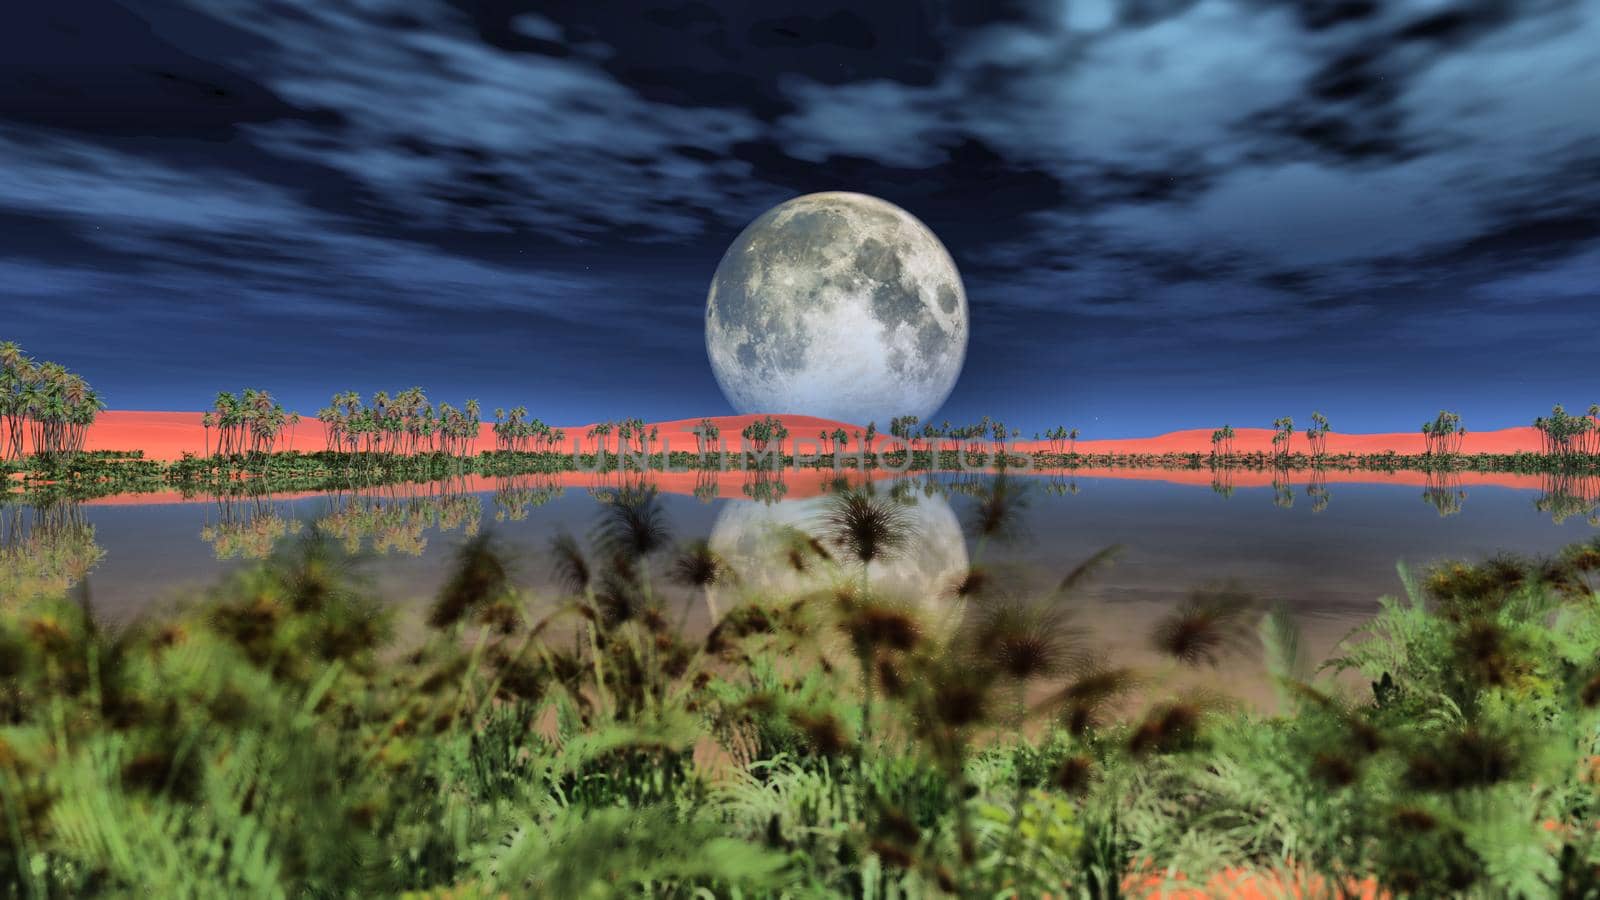 full moon over oasis, 3d render illustration